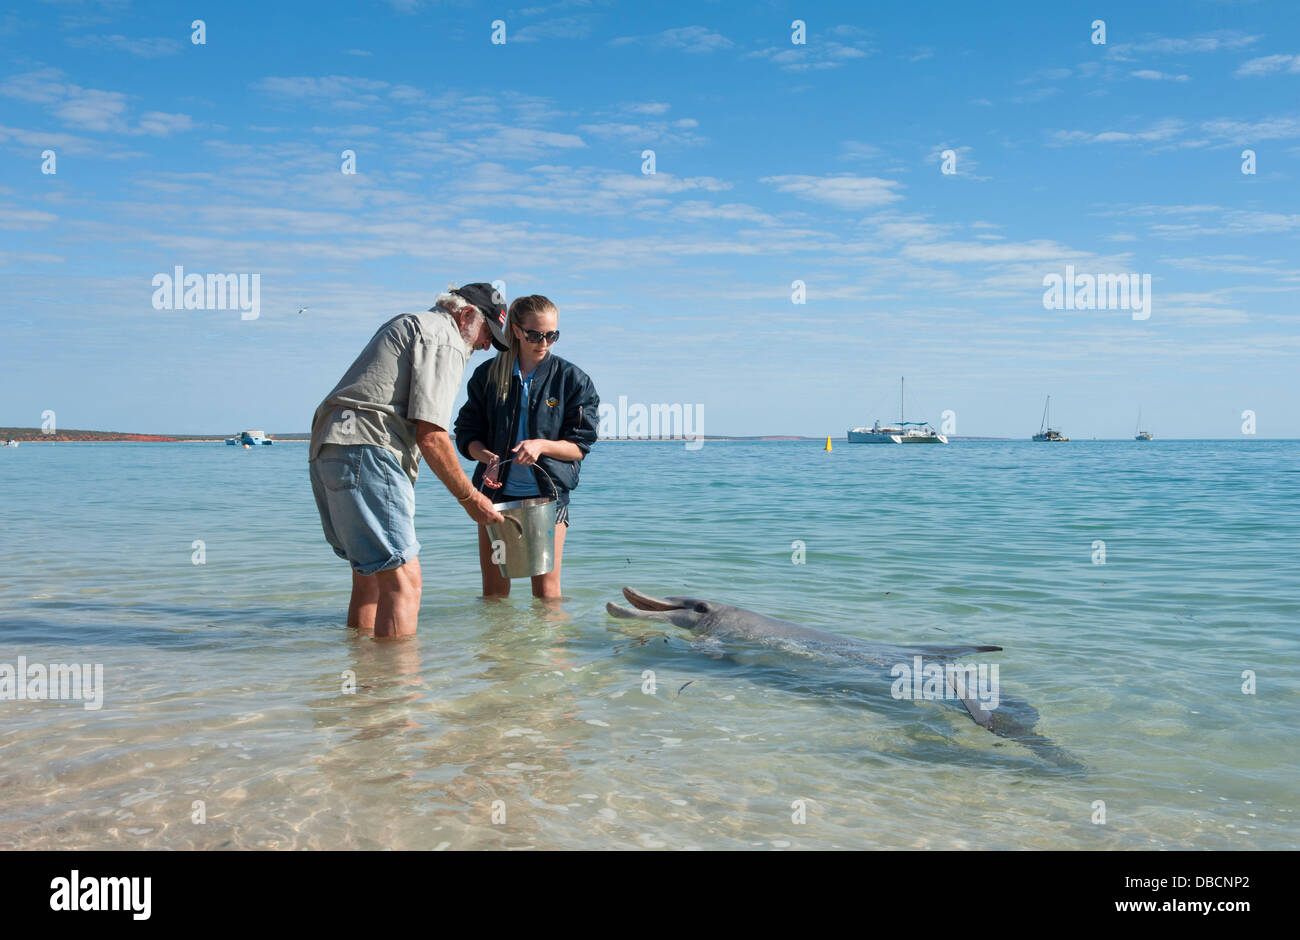 Feeding the dolphins programme for tourists by park rangers at Monkey Mia, Shark Bay, Western Australia Stock Photo